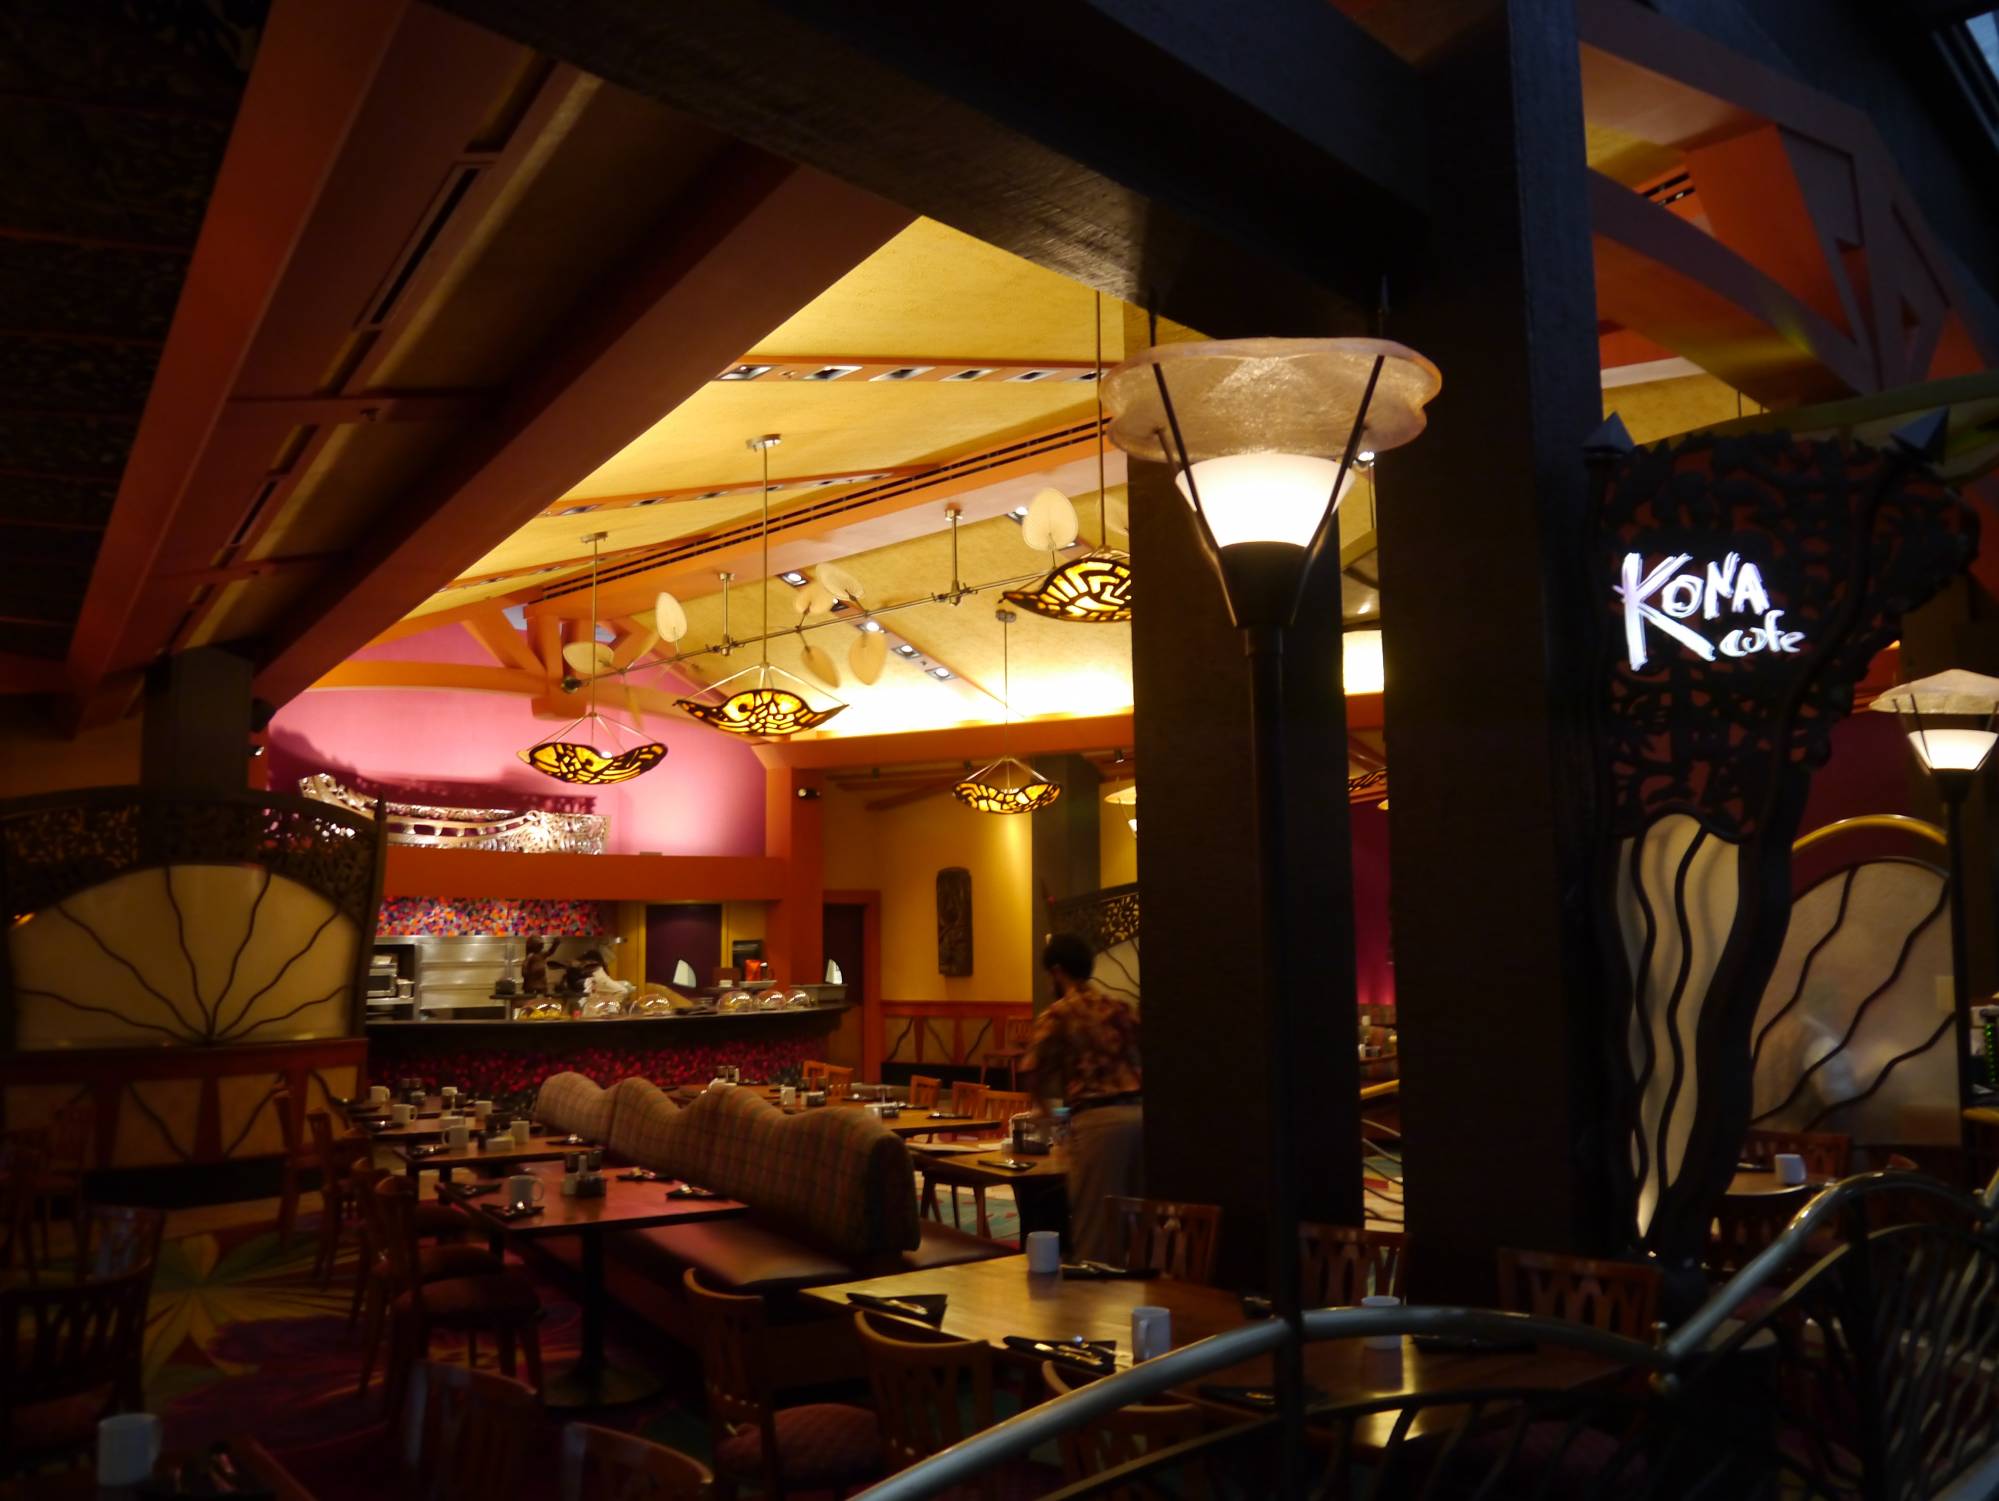 Enjoy dinner at the Kona Cafe at Disney's Polynesian Village Resort |PassPorter.com